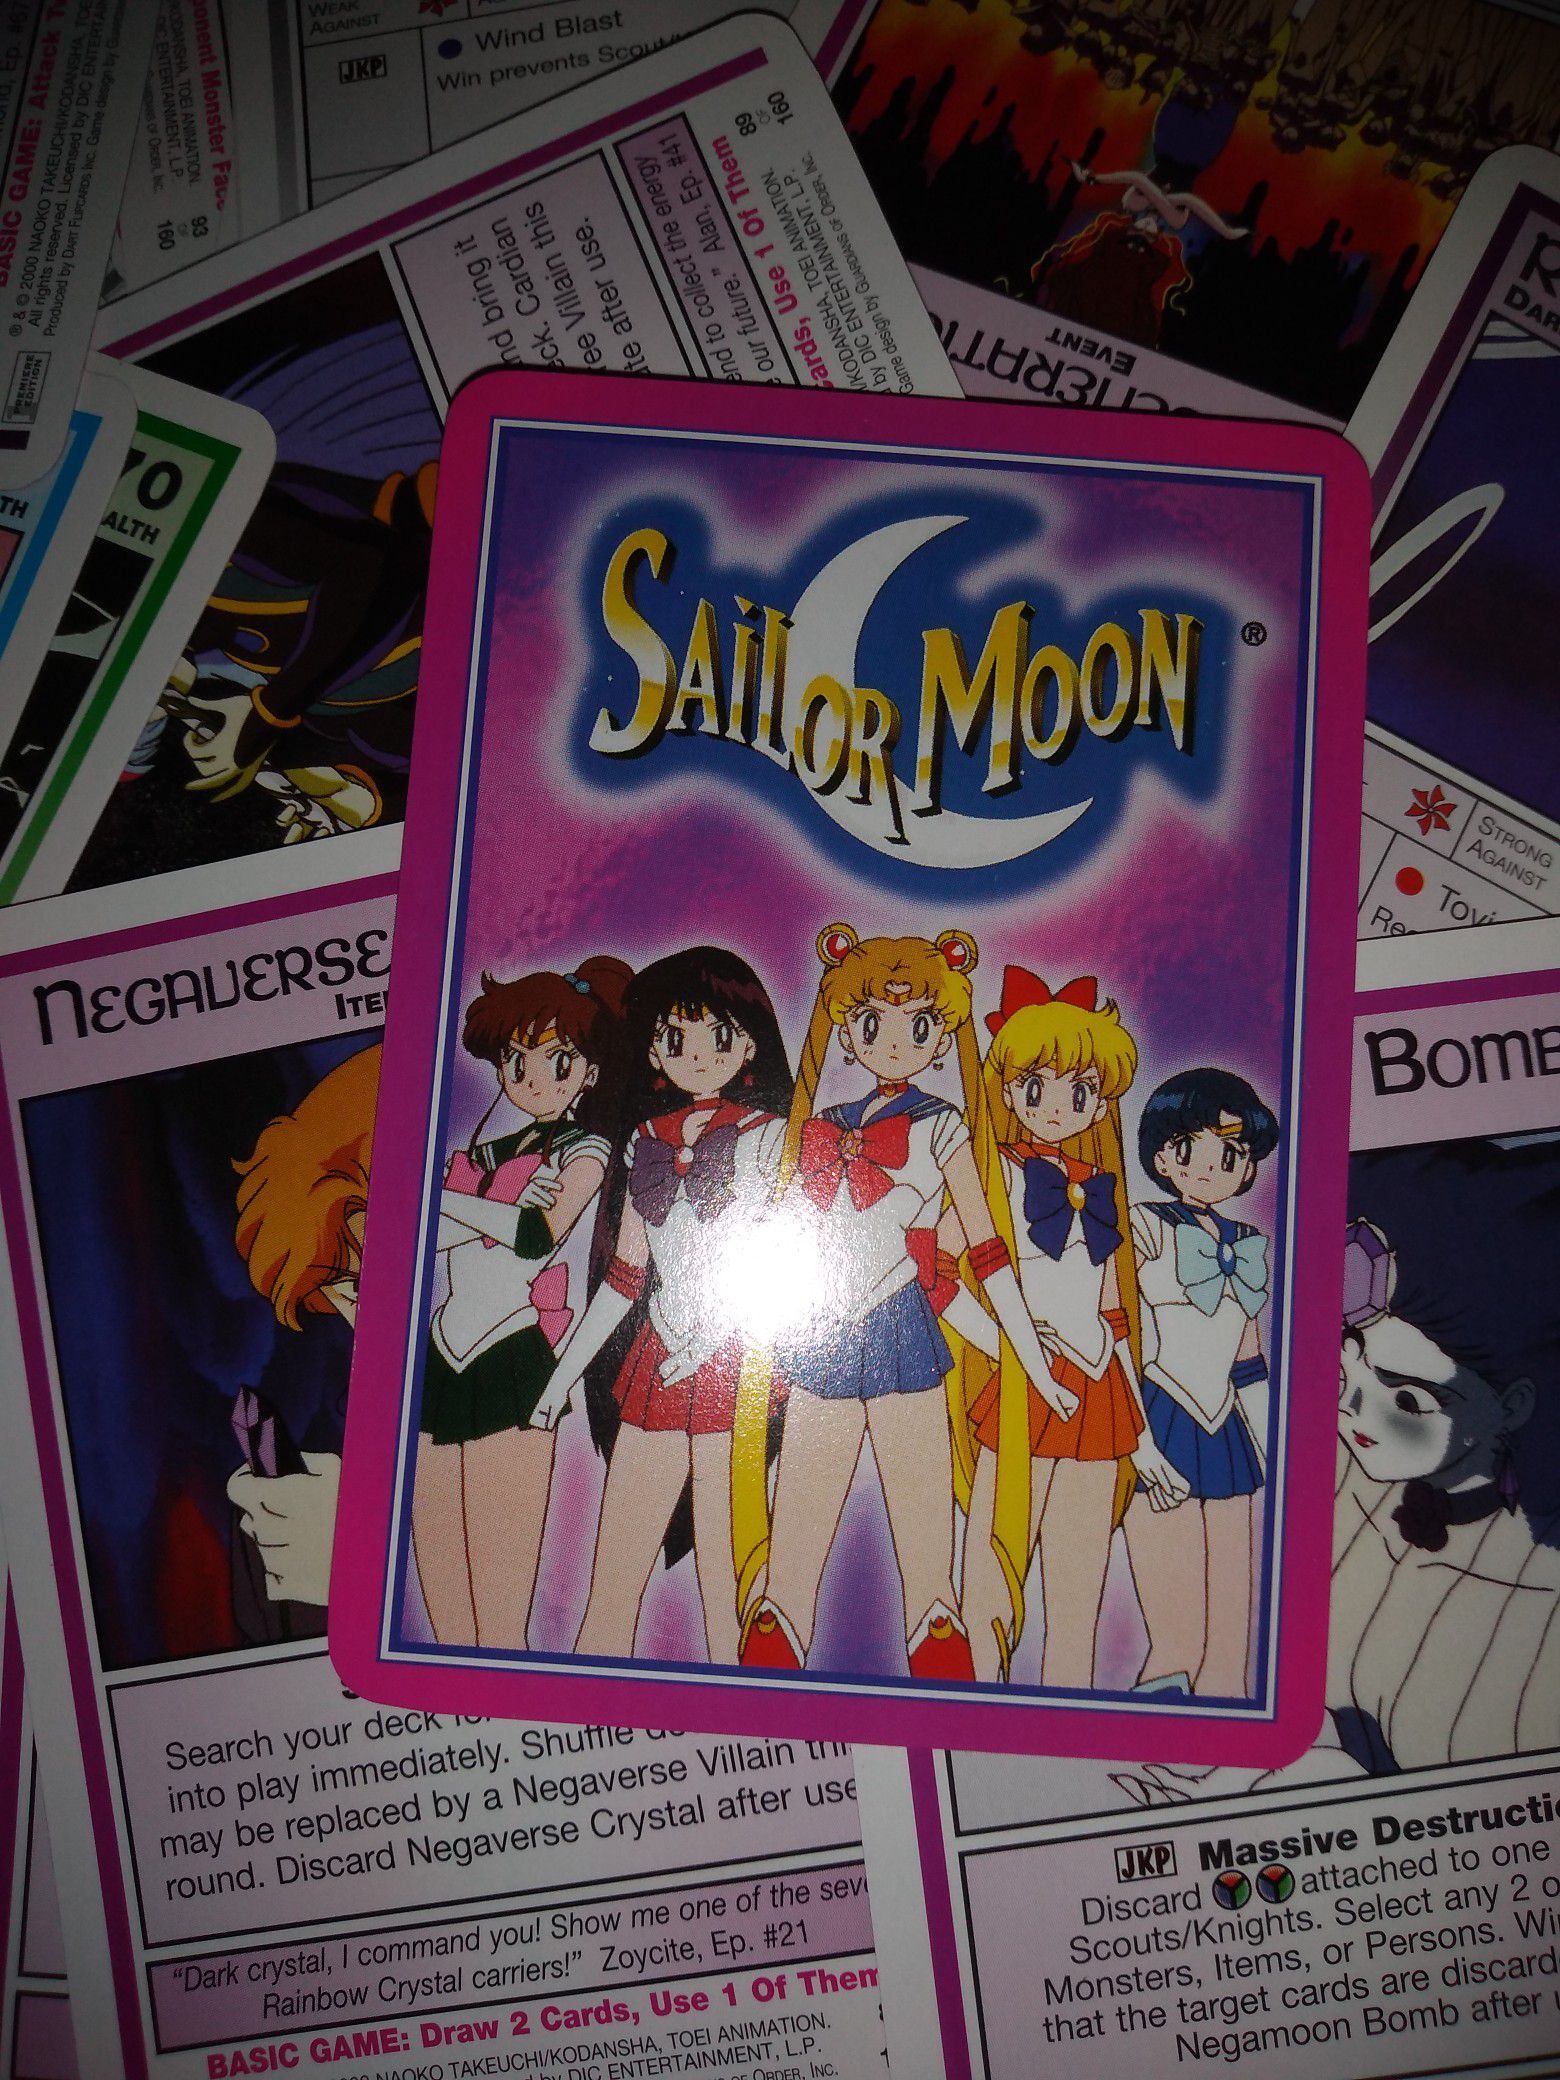 Sailor moon premier edition card game. Make offer!